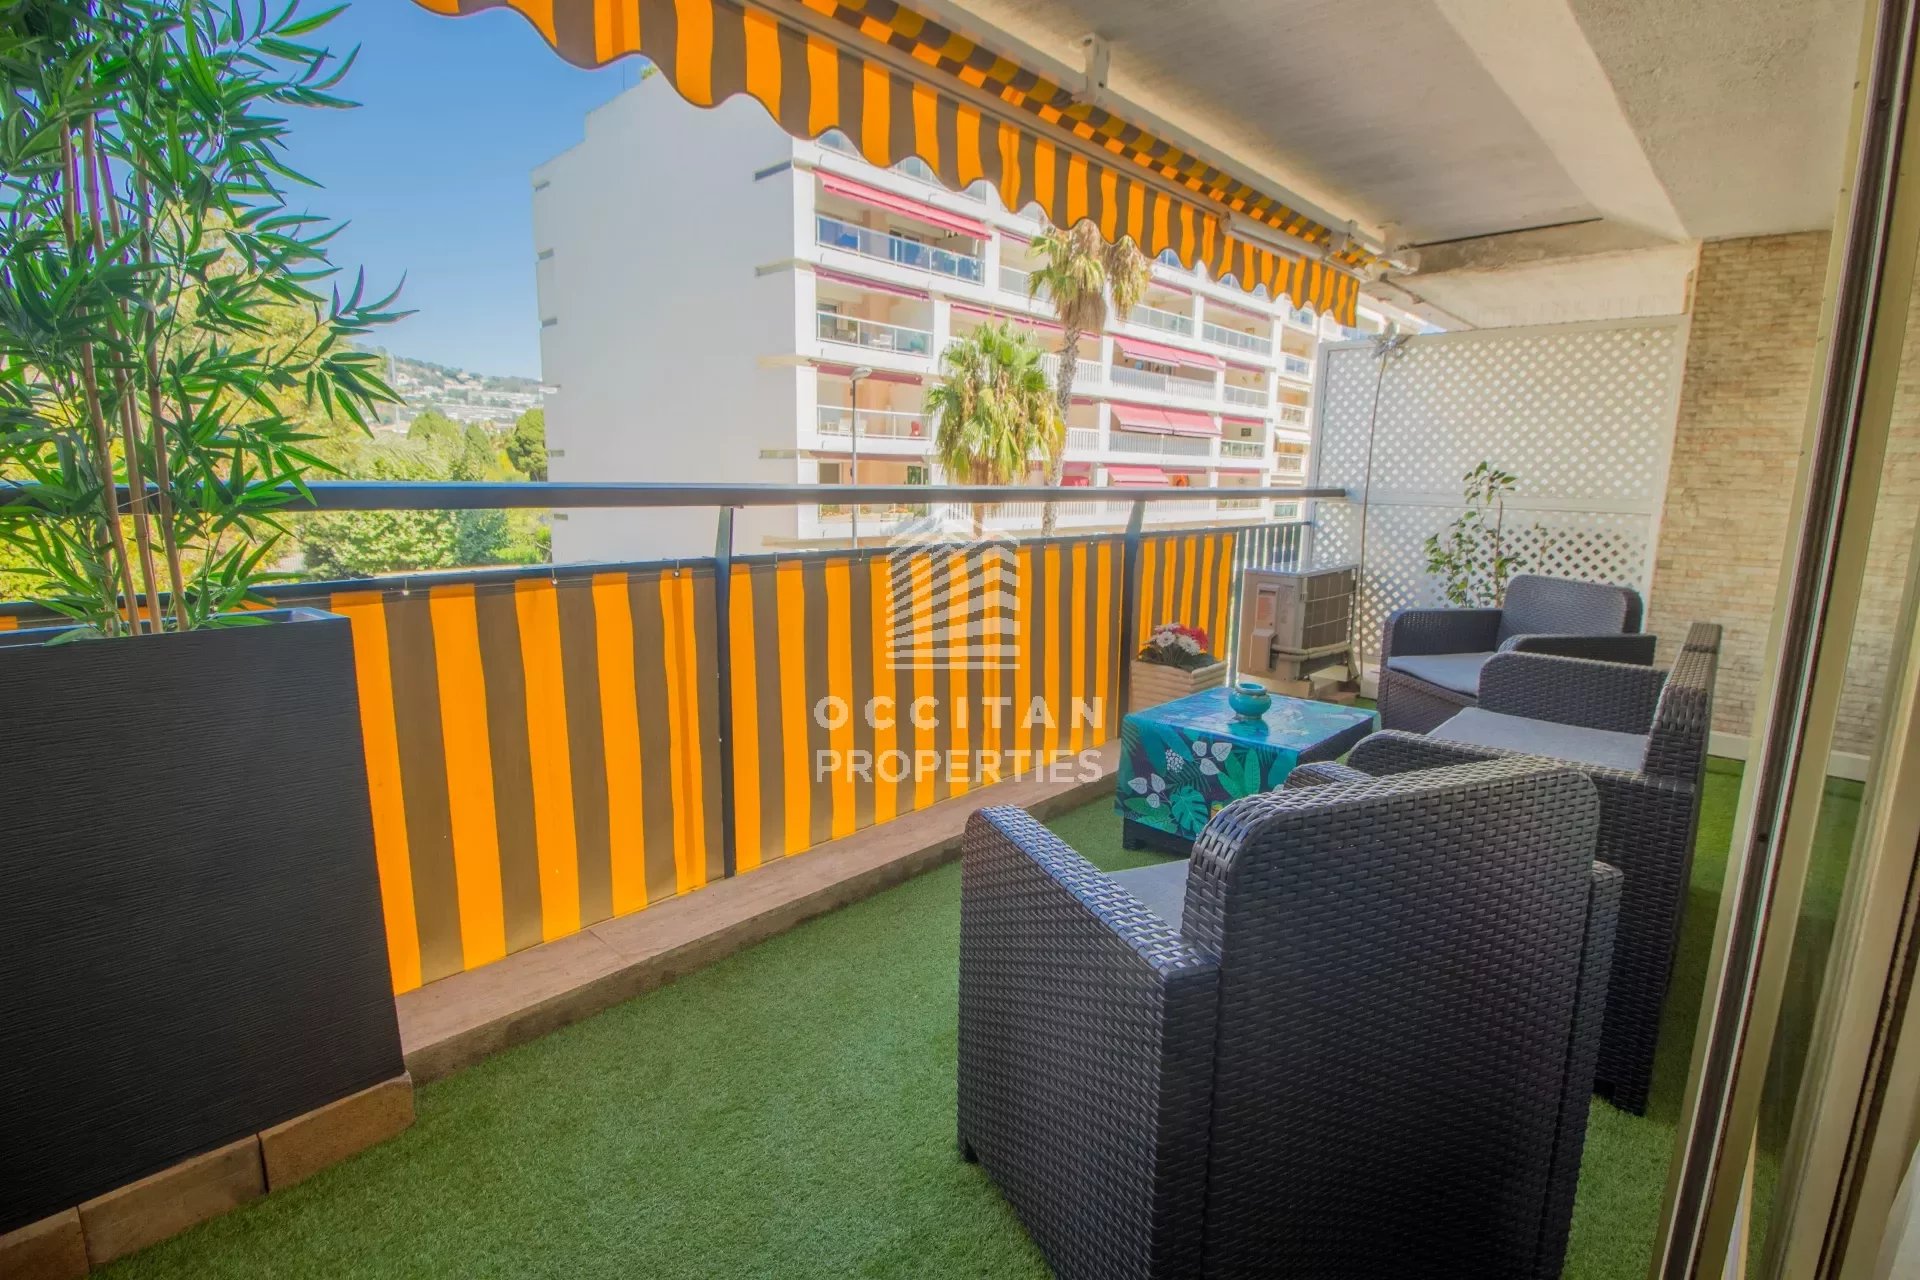 Sale Apartment - Cannes Palm Beach